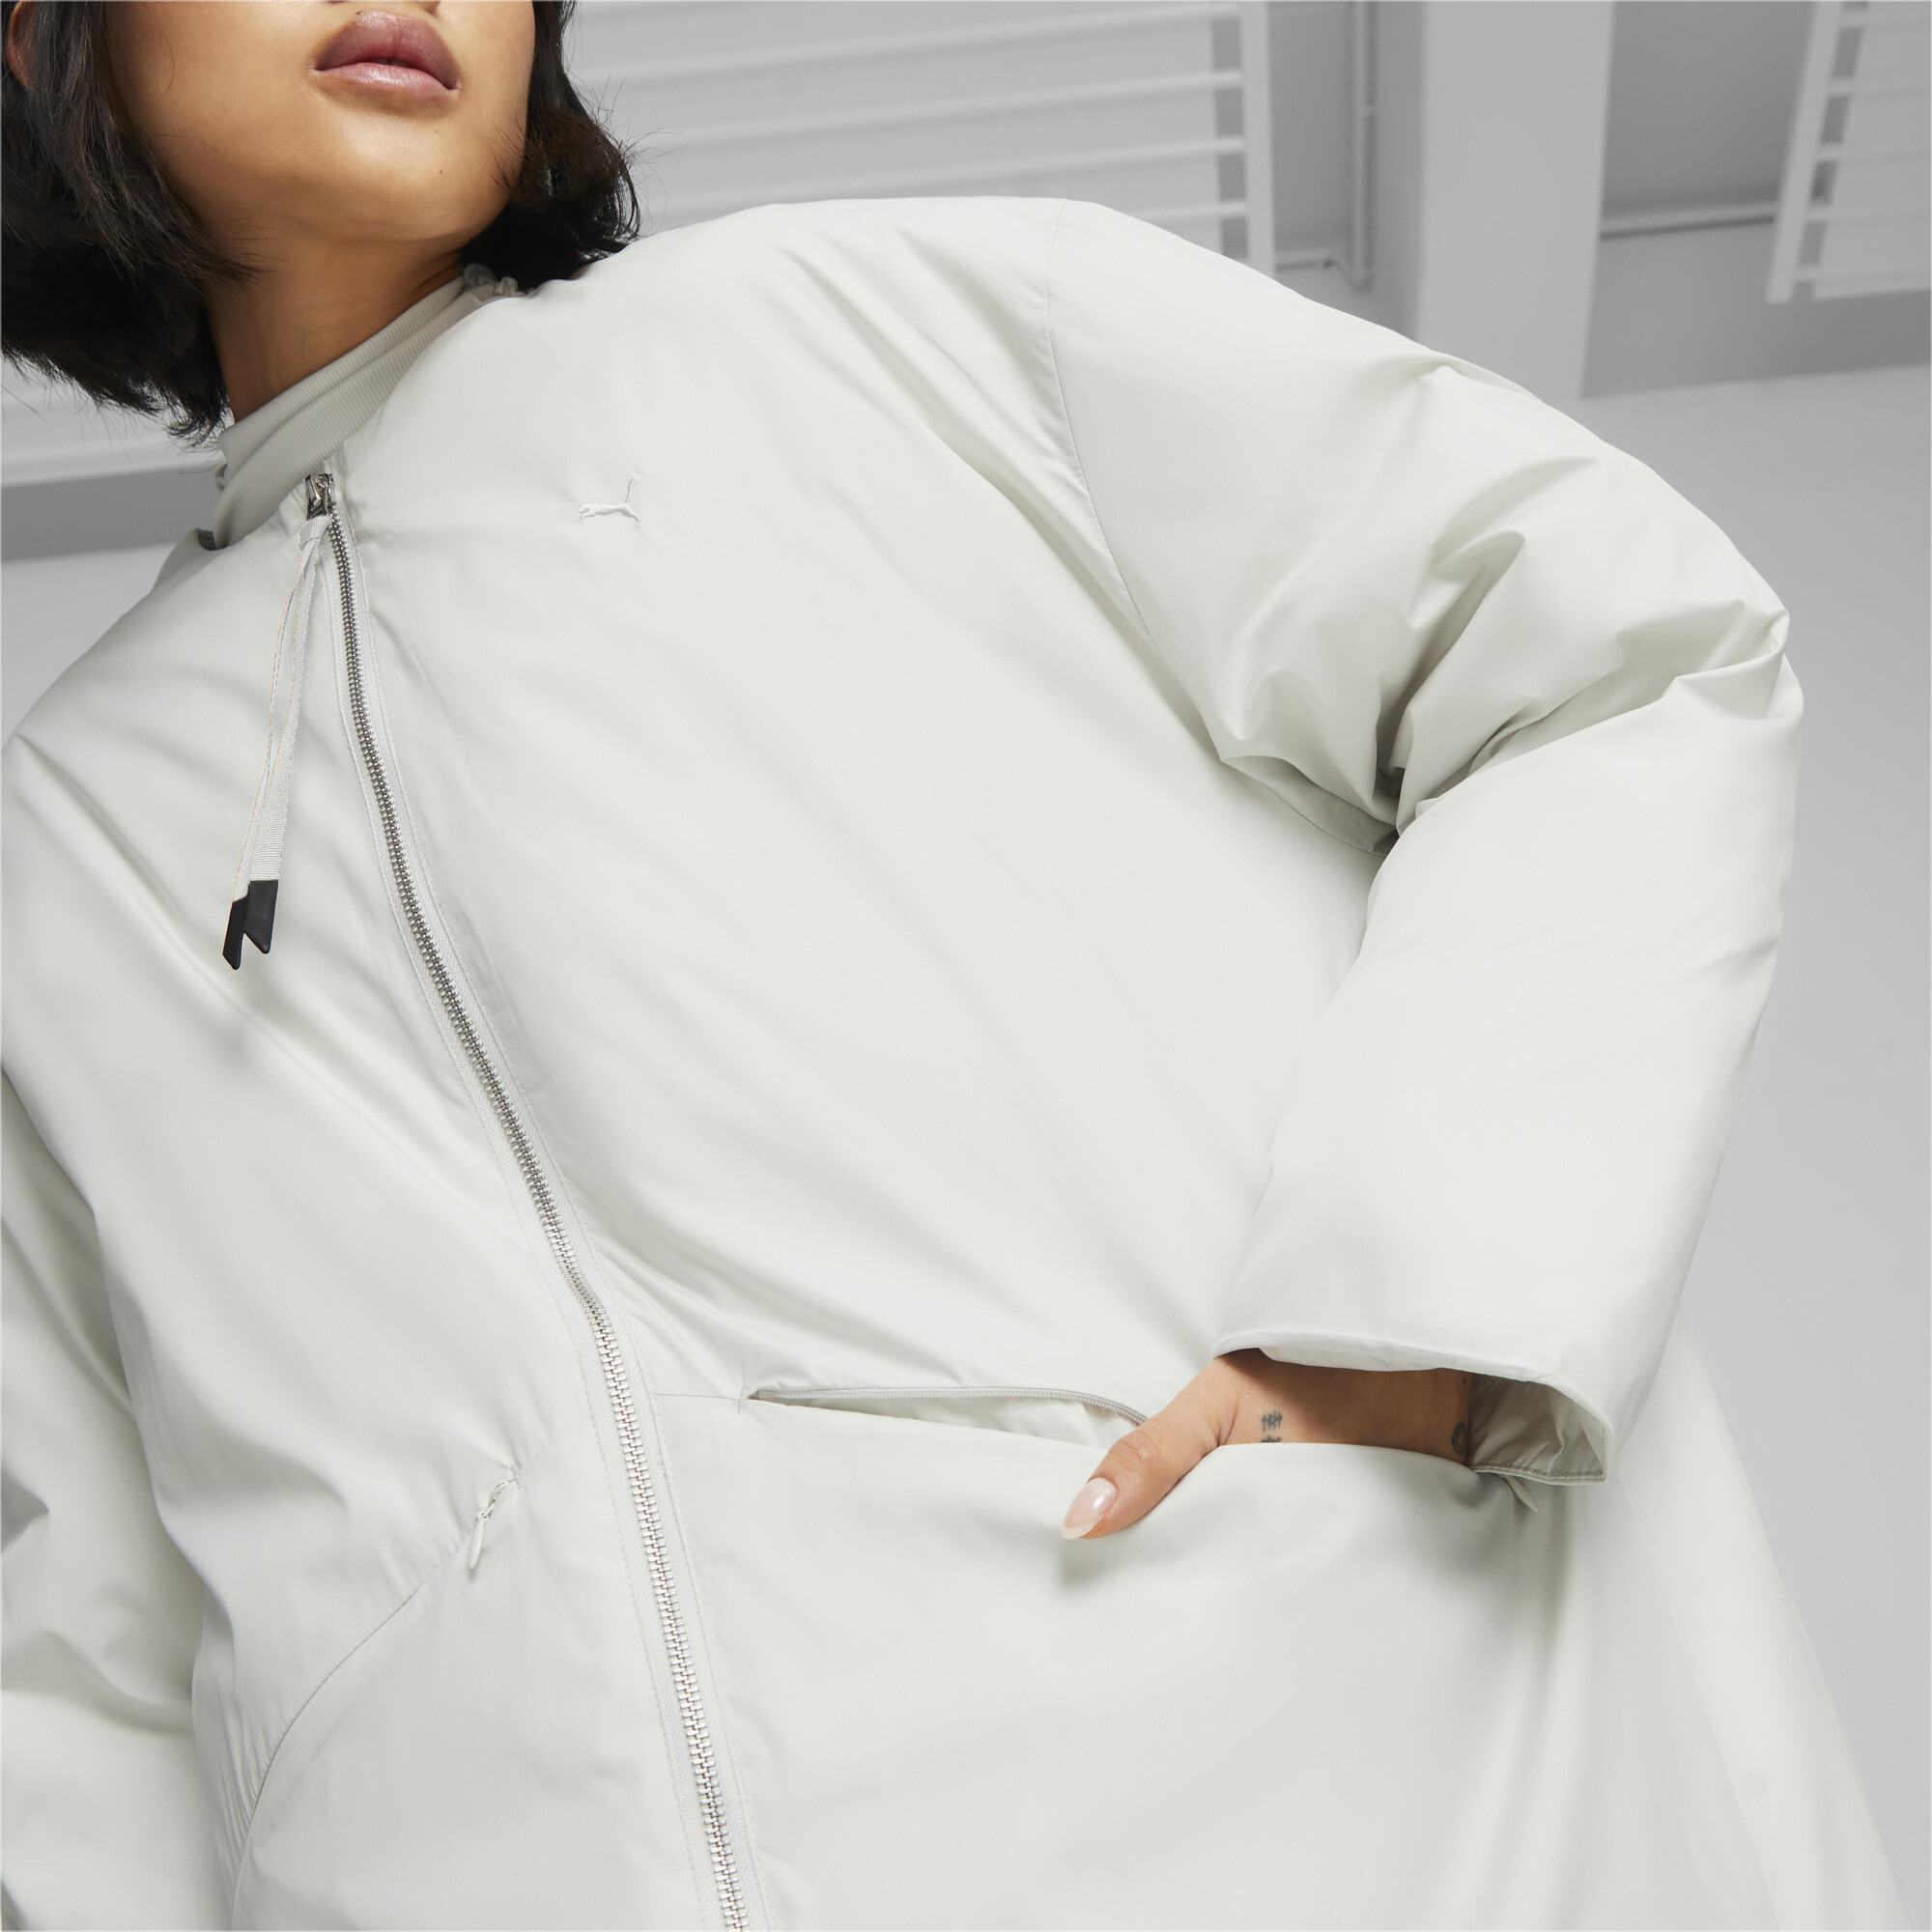 Women's PUMA YONA Puffer Jacket In Gray, Size Small